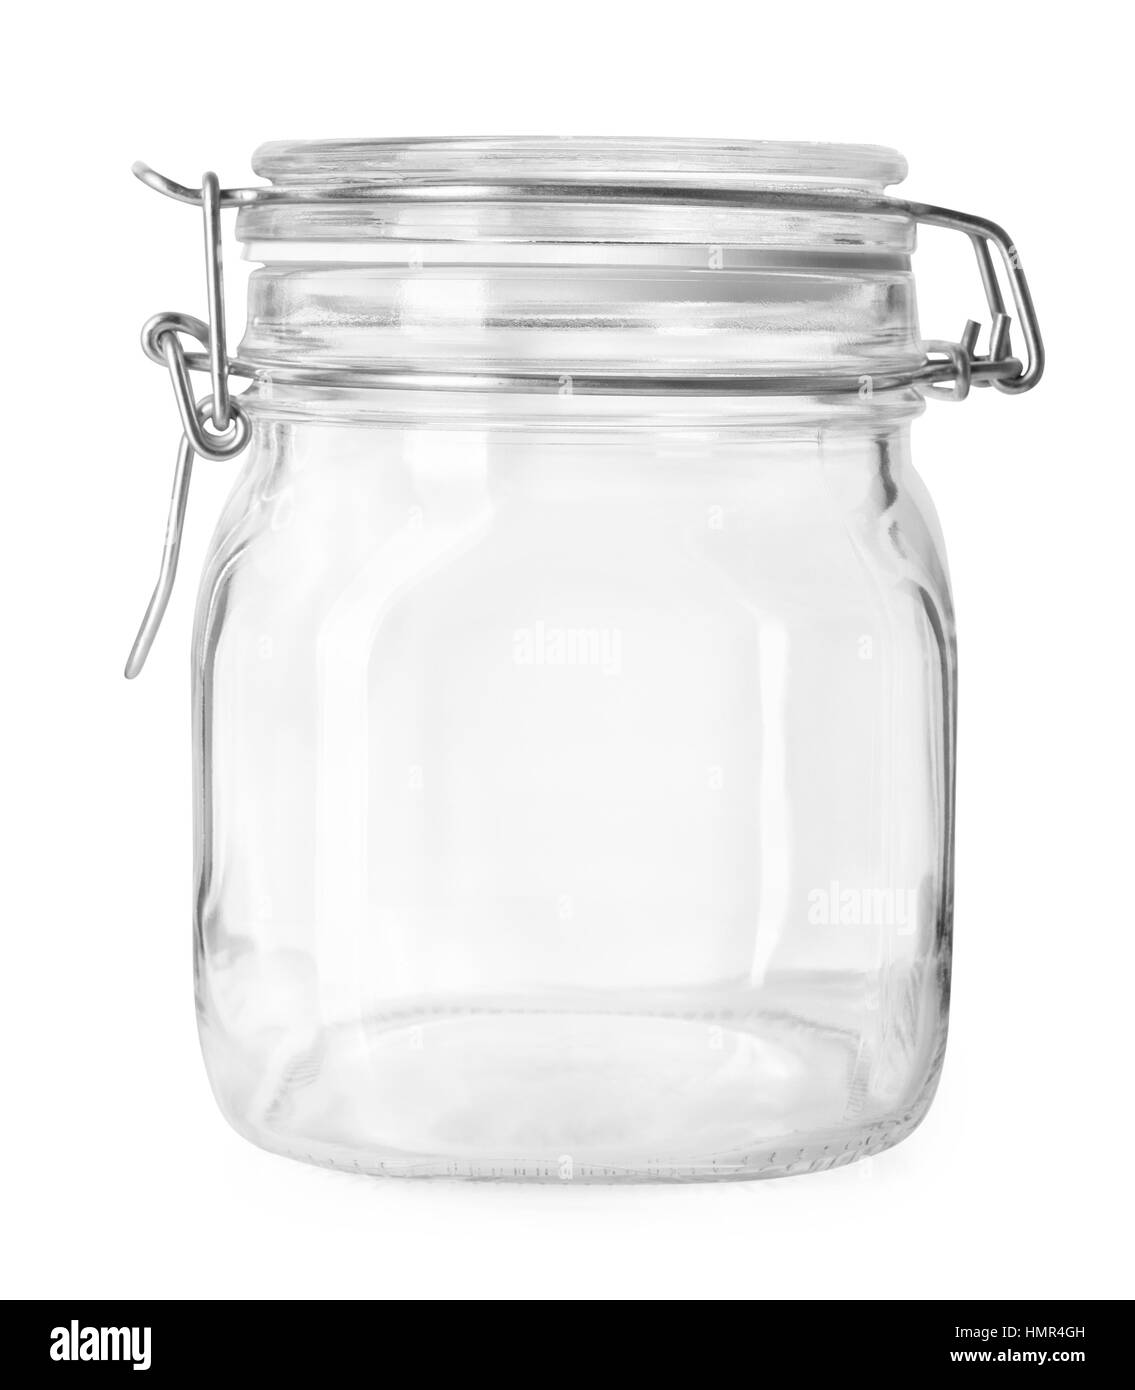 Empty glass jar isolated on white Stock Photo